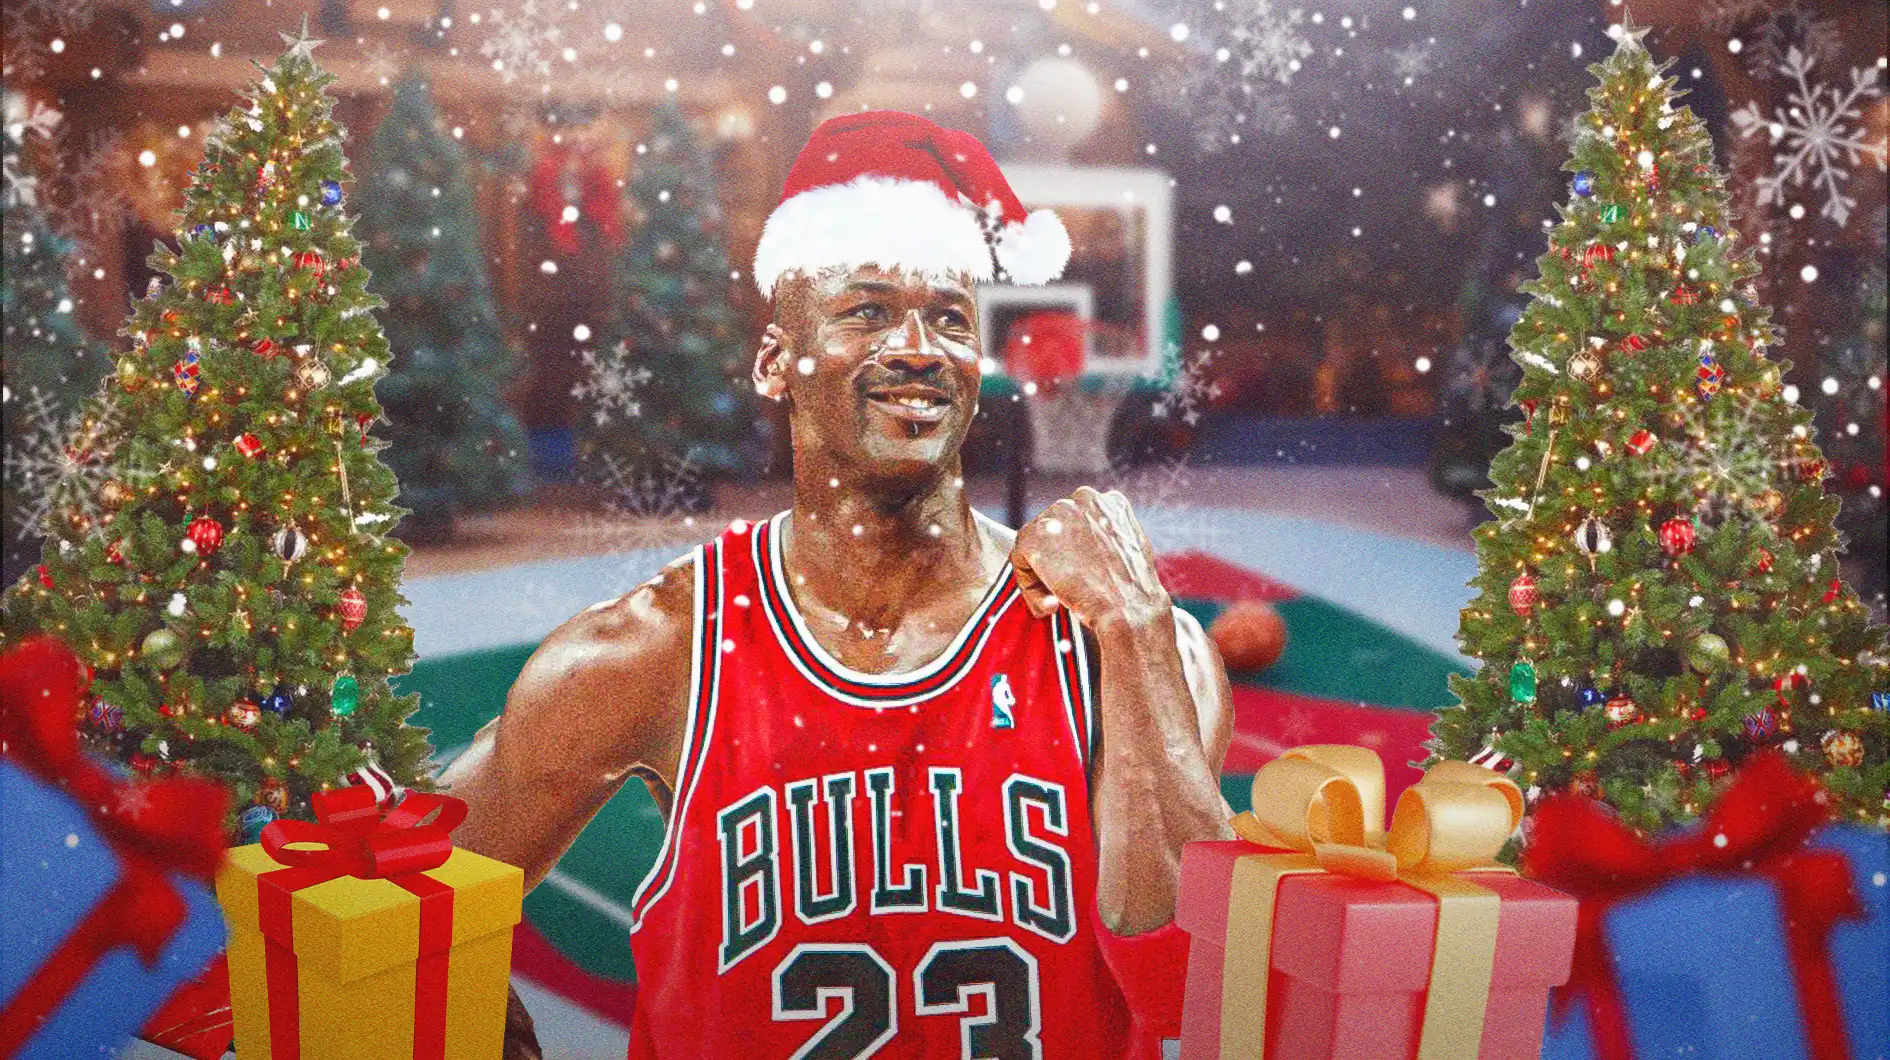 Bulls' Michael Jordan in a Santa hat